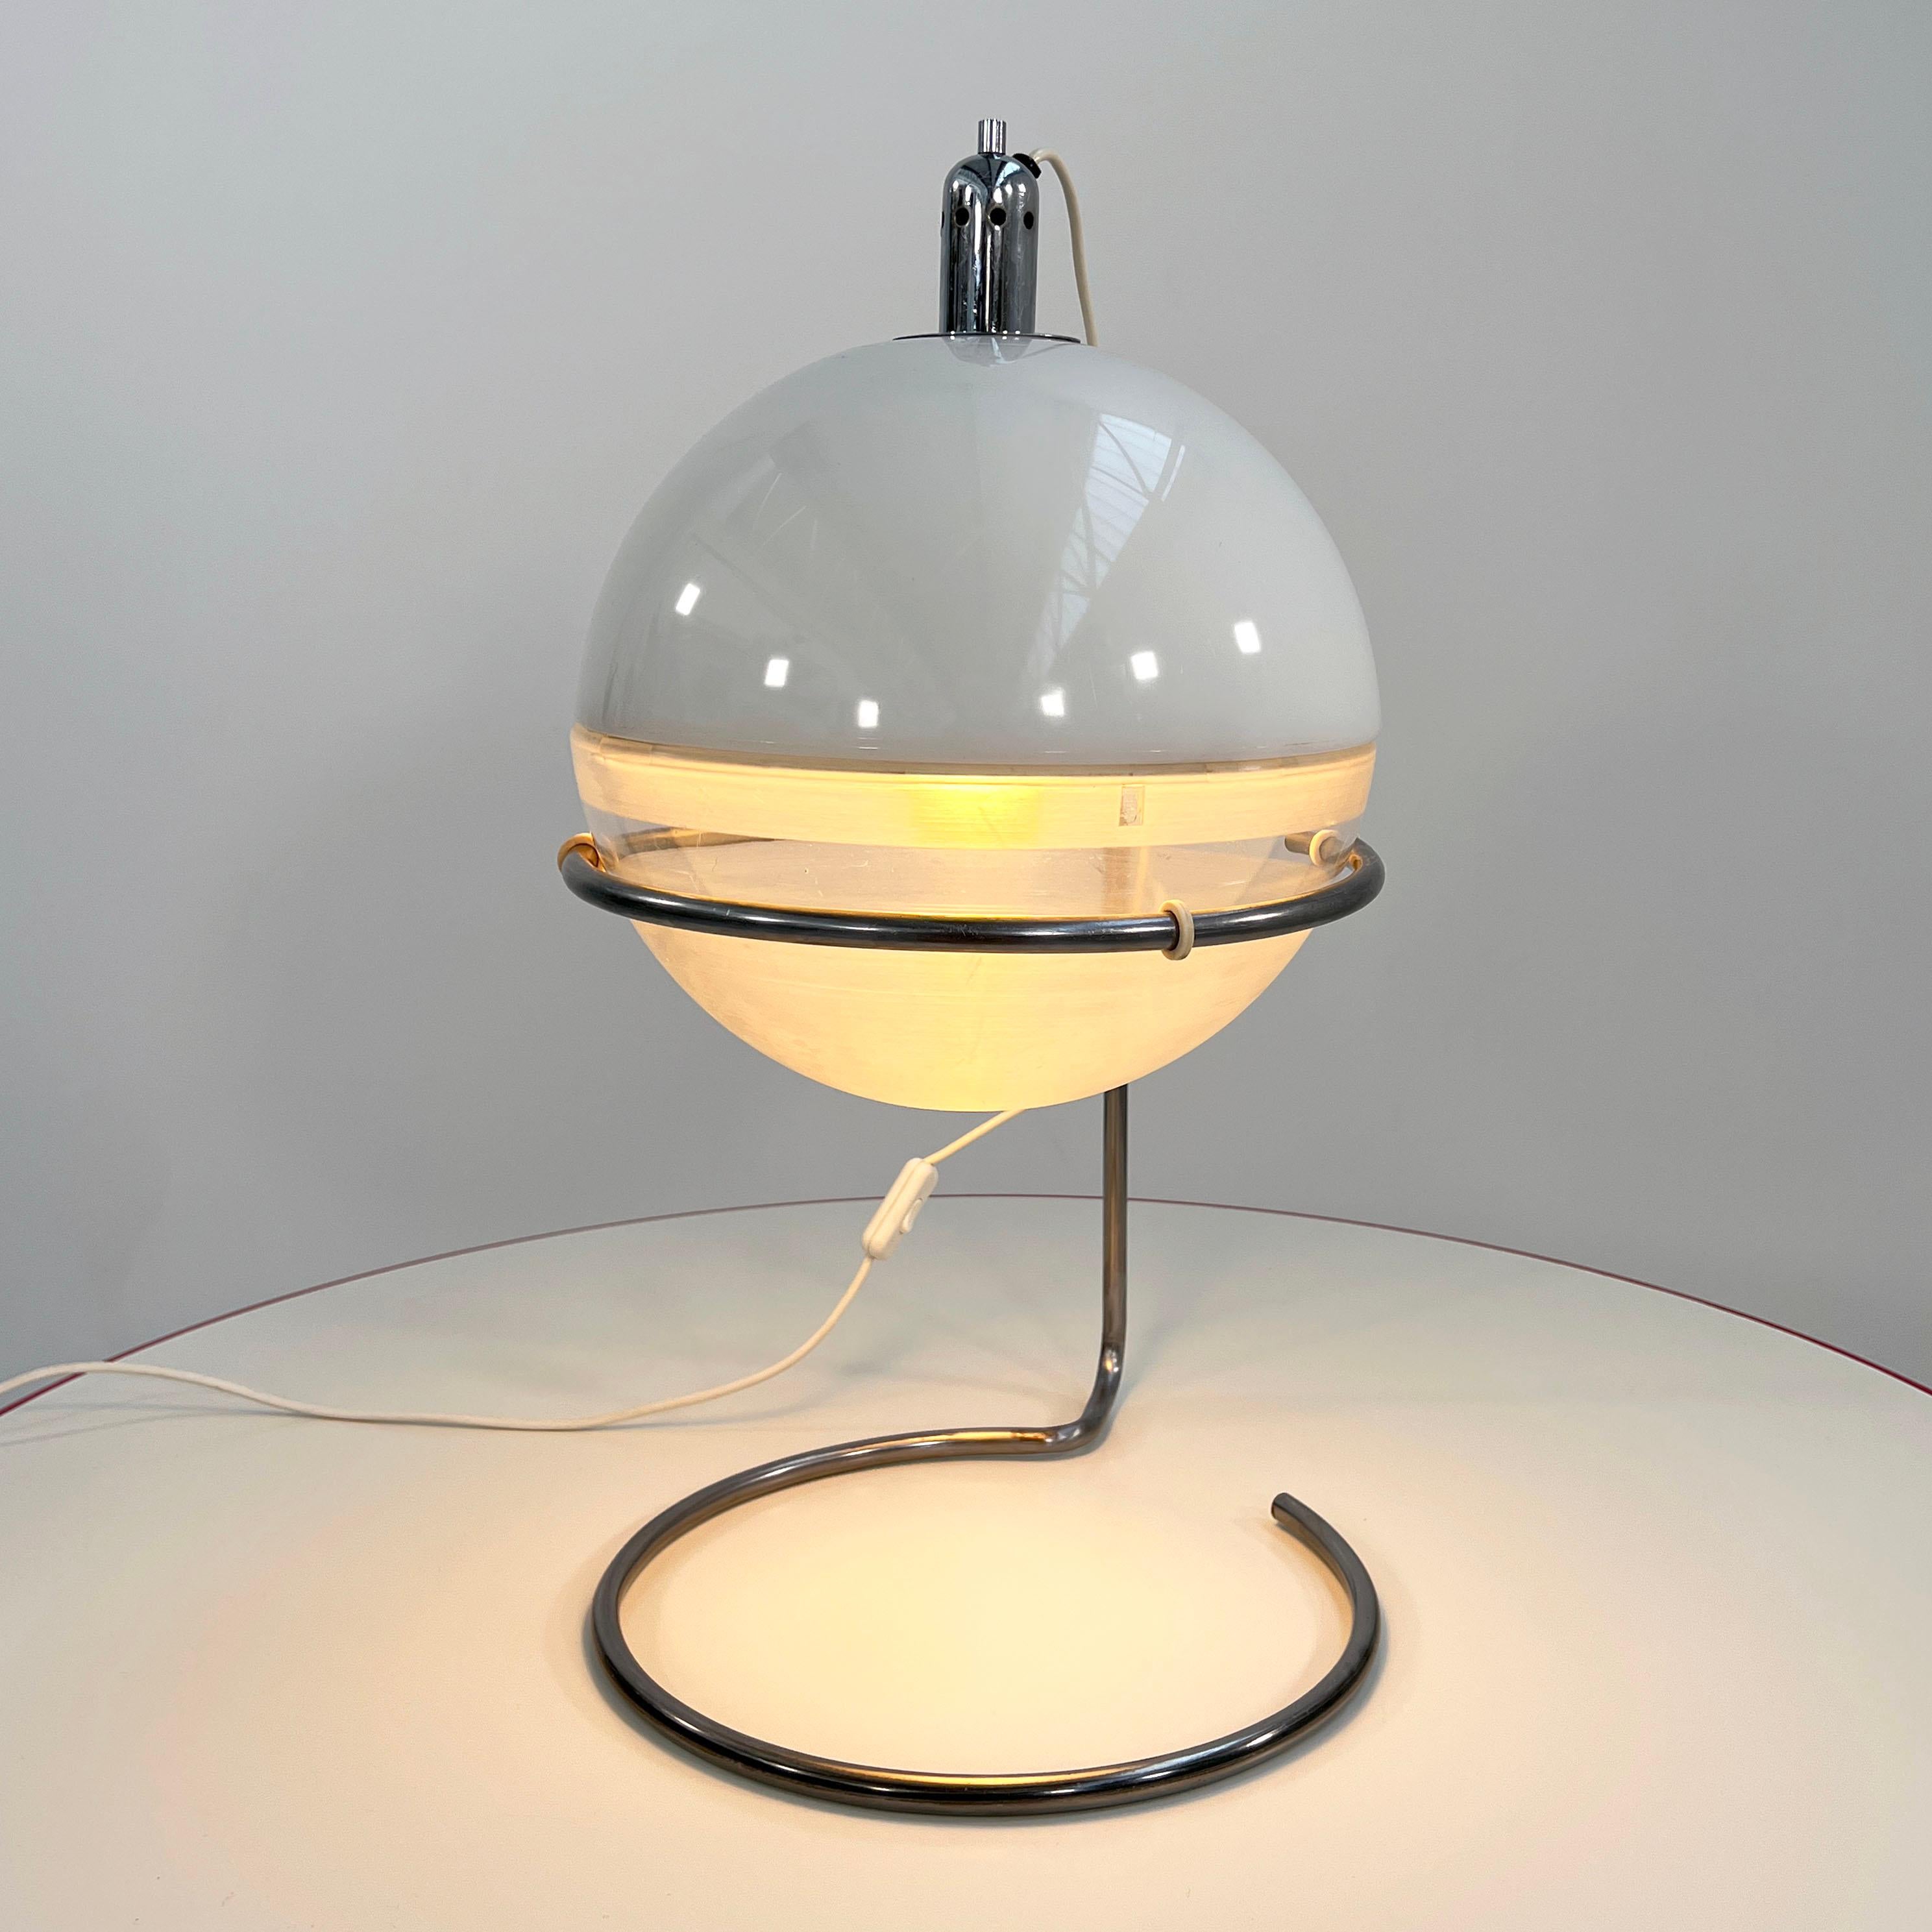 Italian Focus Table Lamp by Fabio Lenci for Guzzini, 1970s For Sale